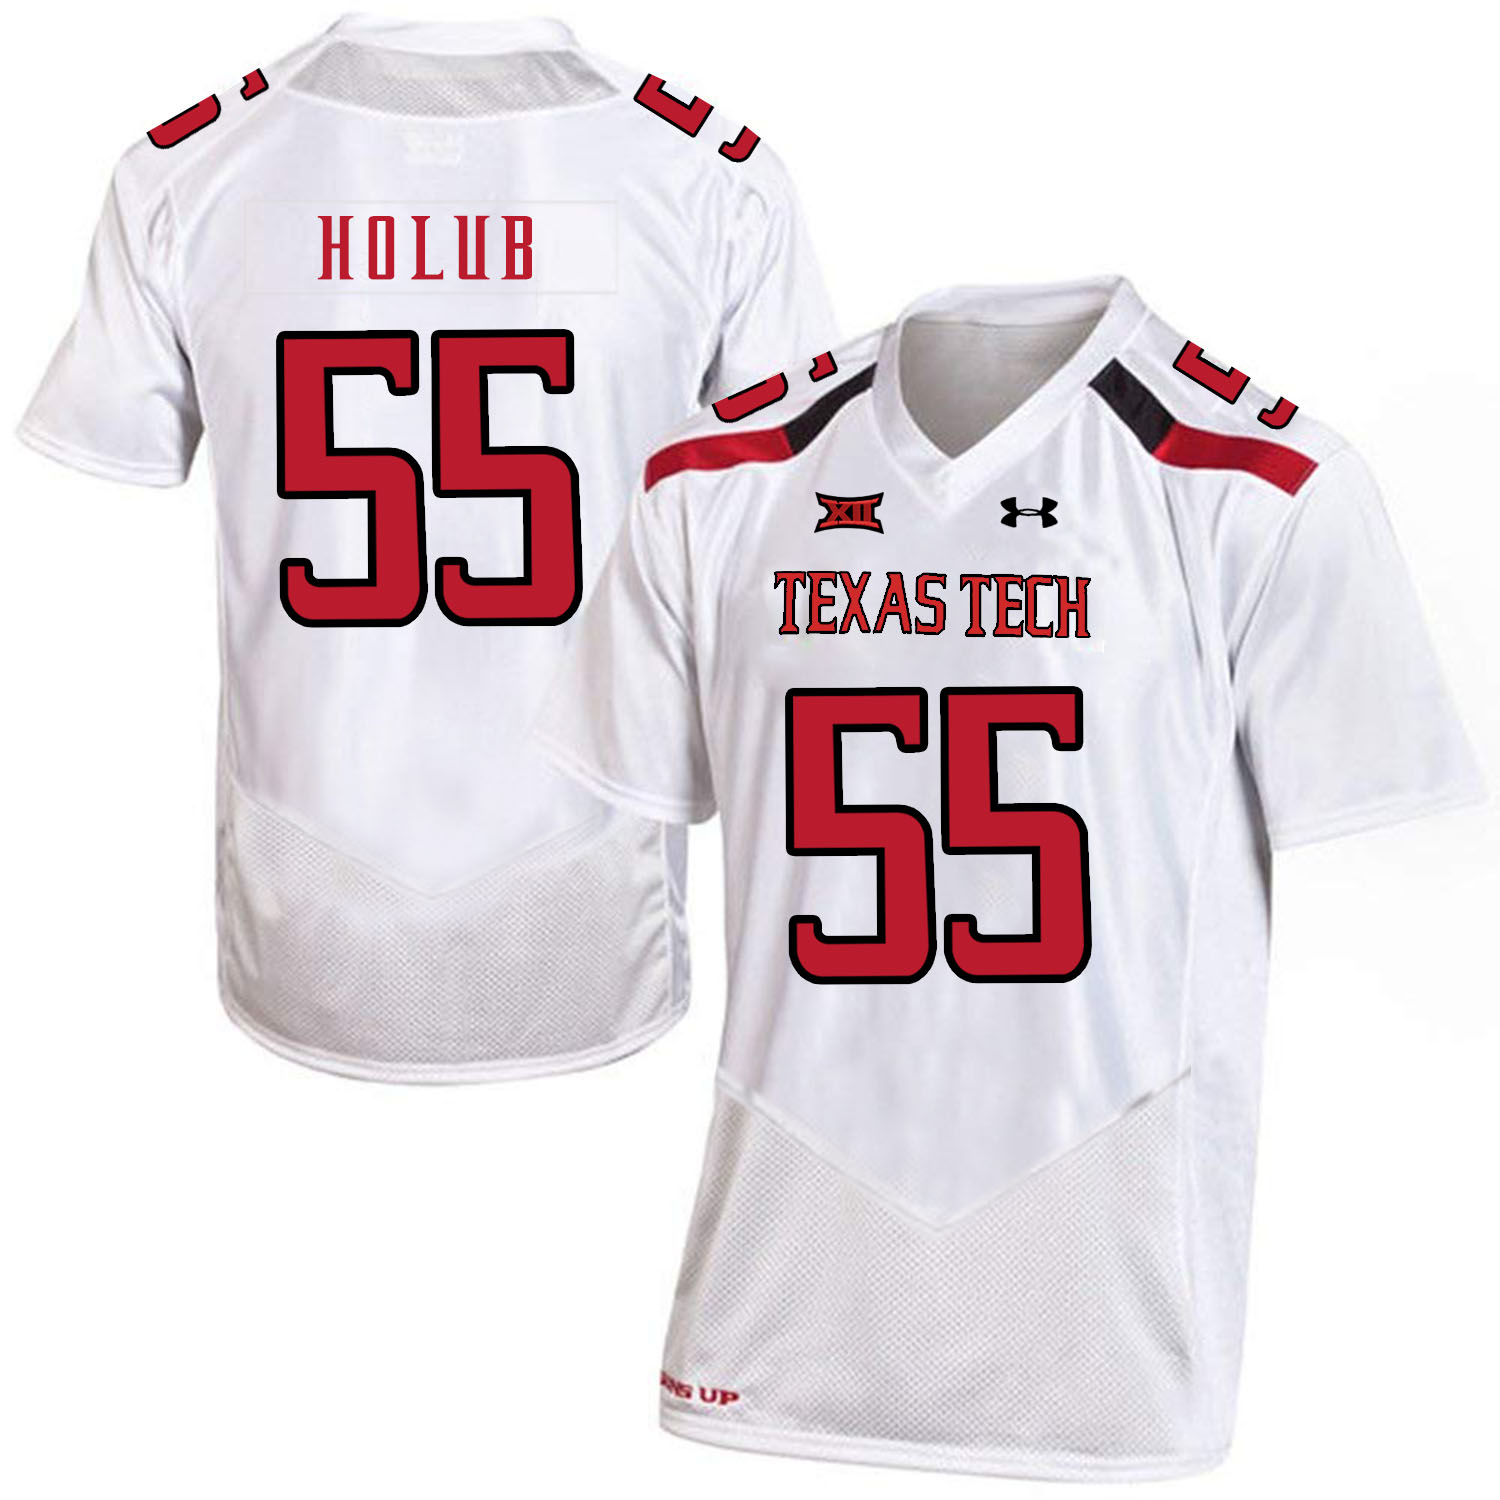 Texas Tech Red Raiders 55 E.J. Holub White College Football Jersey